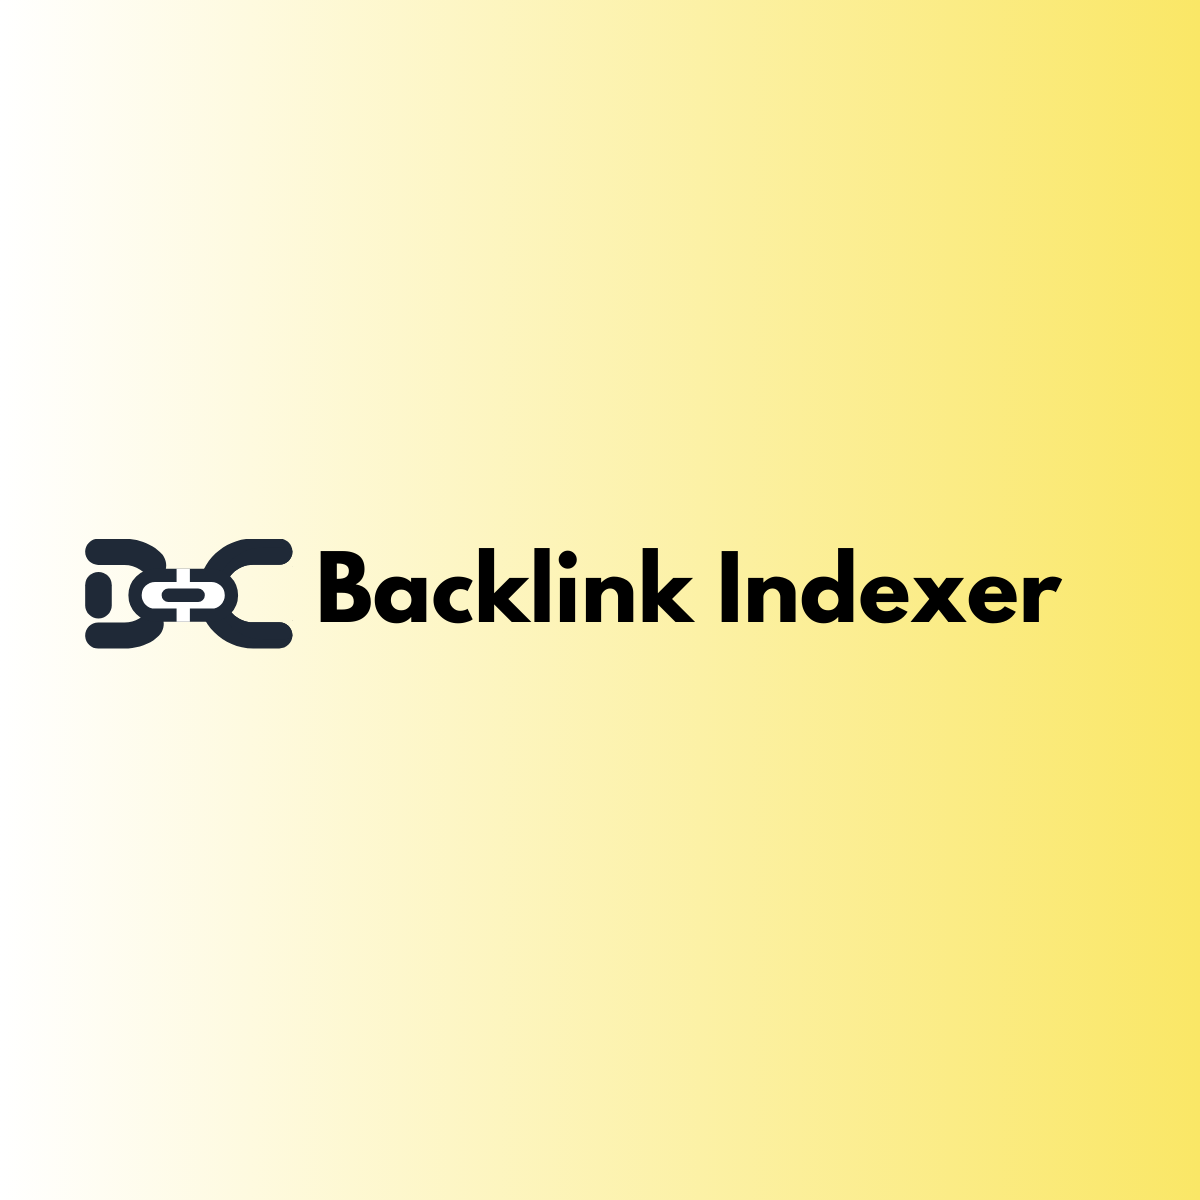 Backlink Indexer By ... logo